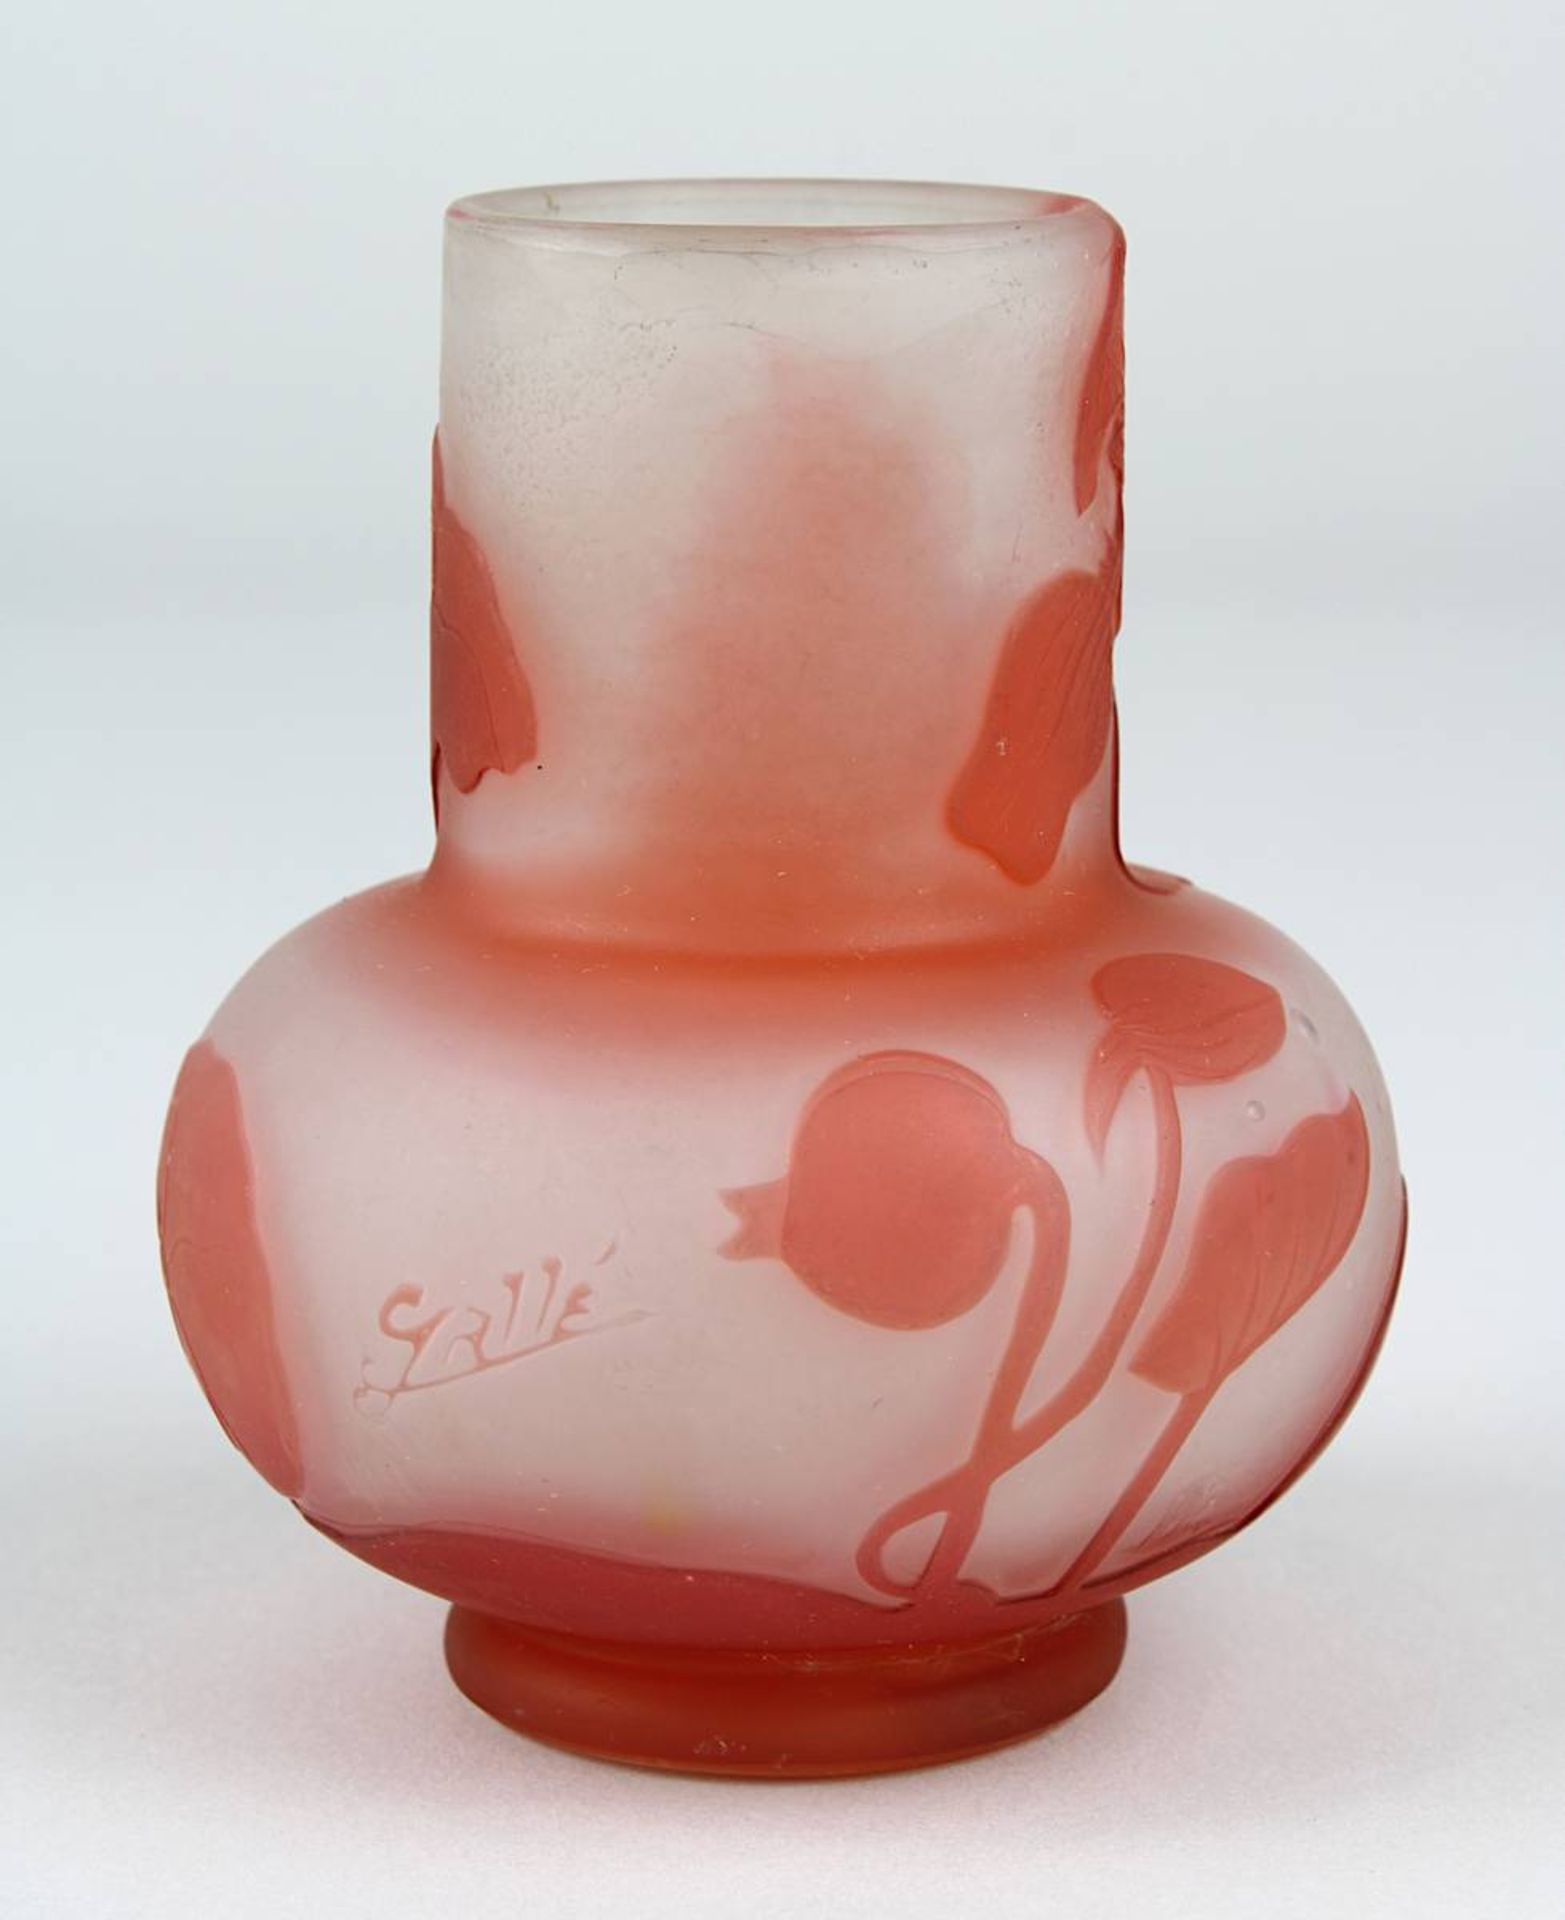 Gallé Miniatur-Jugendstil-Vase mit Windenmotiv, Nancy um 1920, matt geätzter Klarglaskorpus, - Image 3 of 4